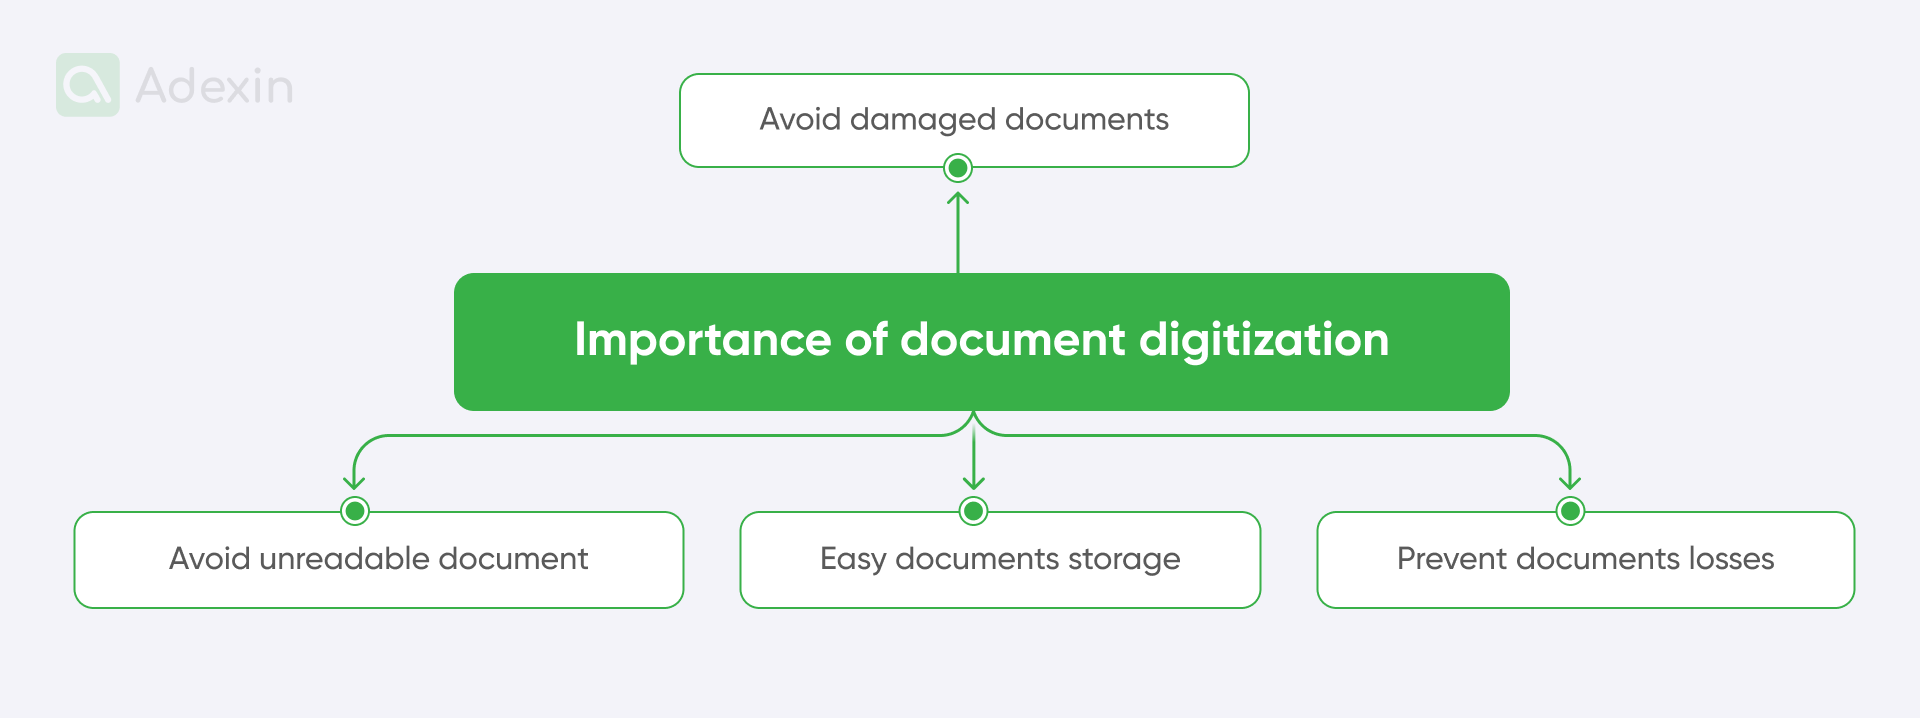 Importance of document digitization 